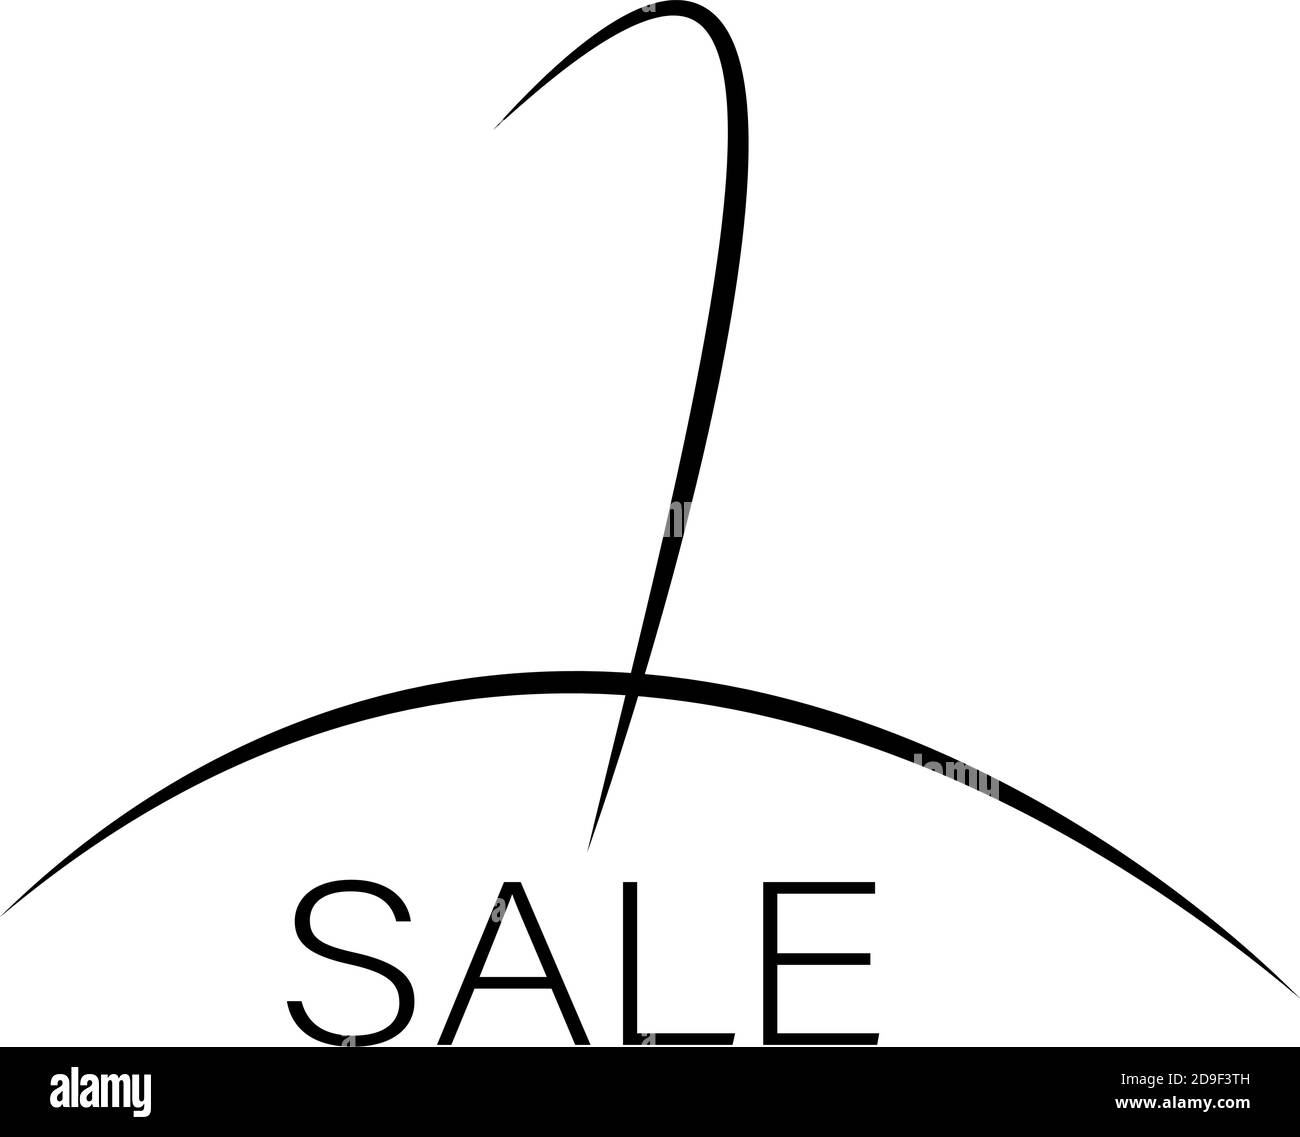 SALE logo Black linear image of clothes hanger. Stock Vector